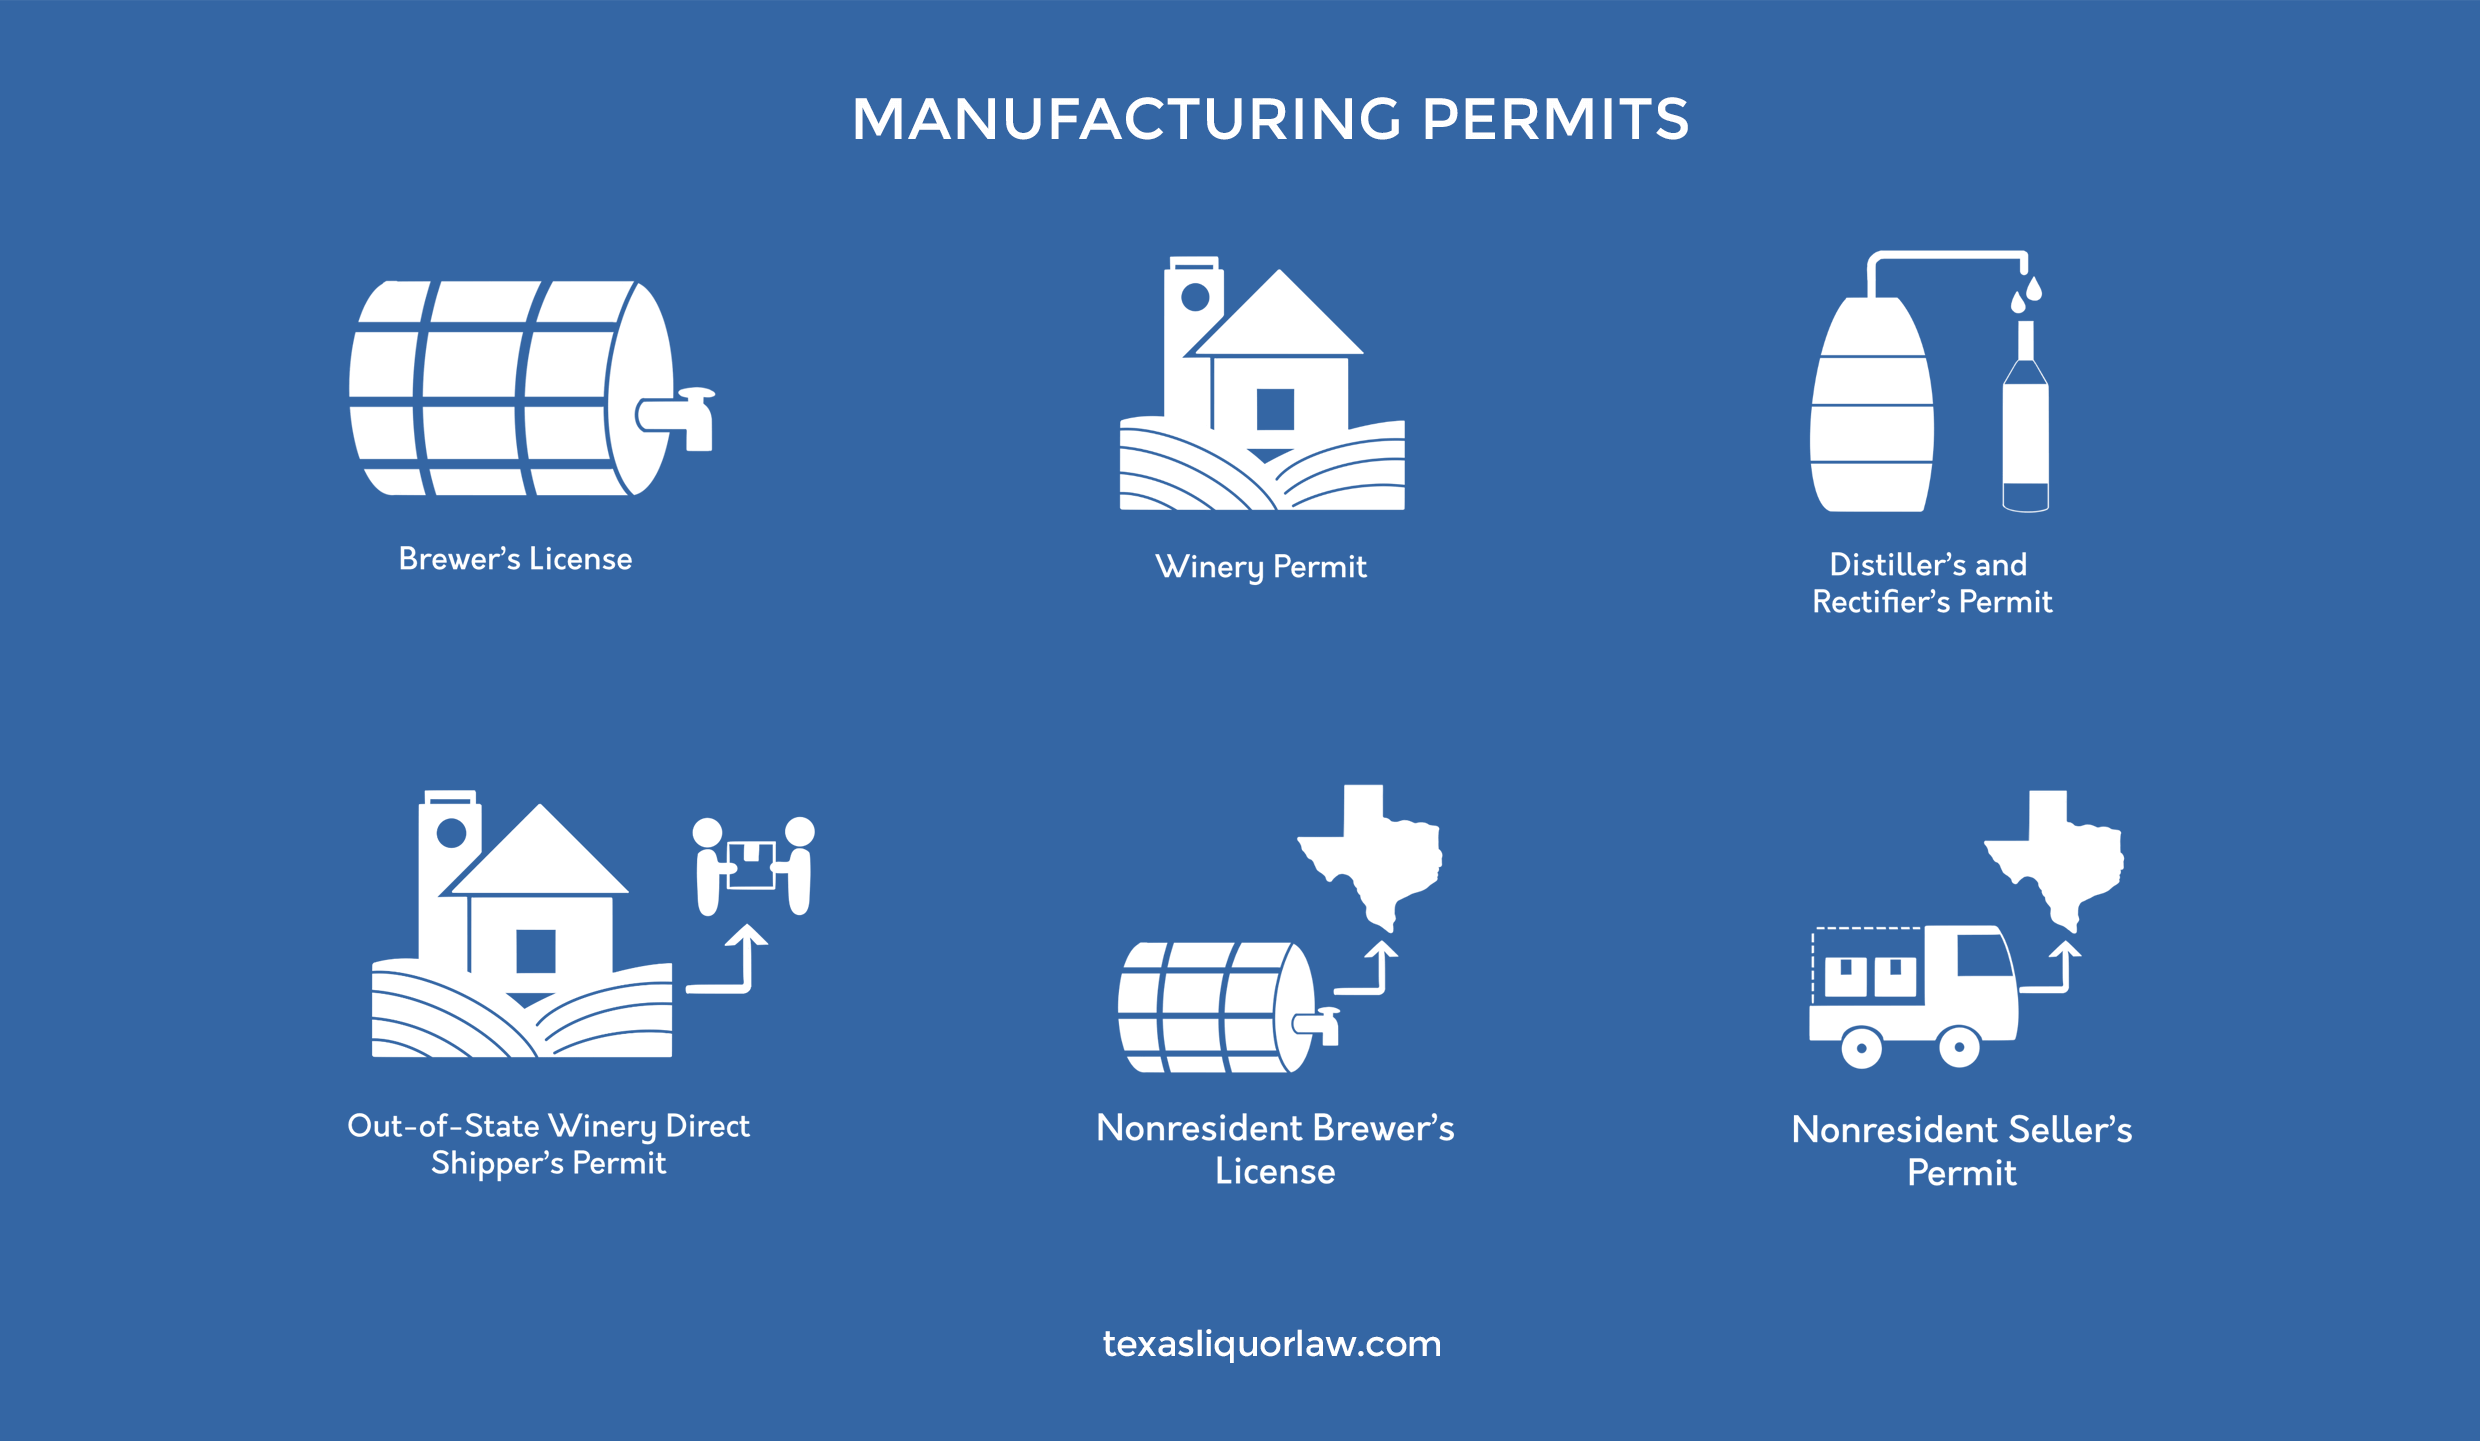 TABC - Manufacturing Permits